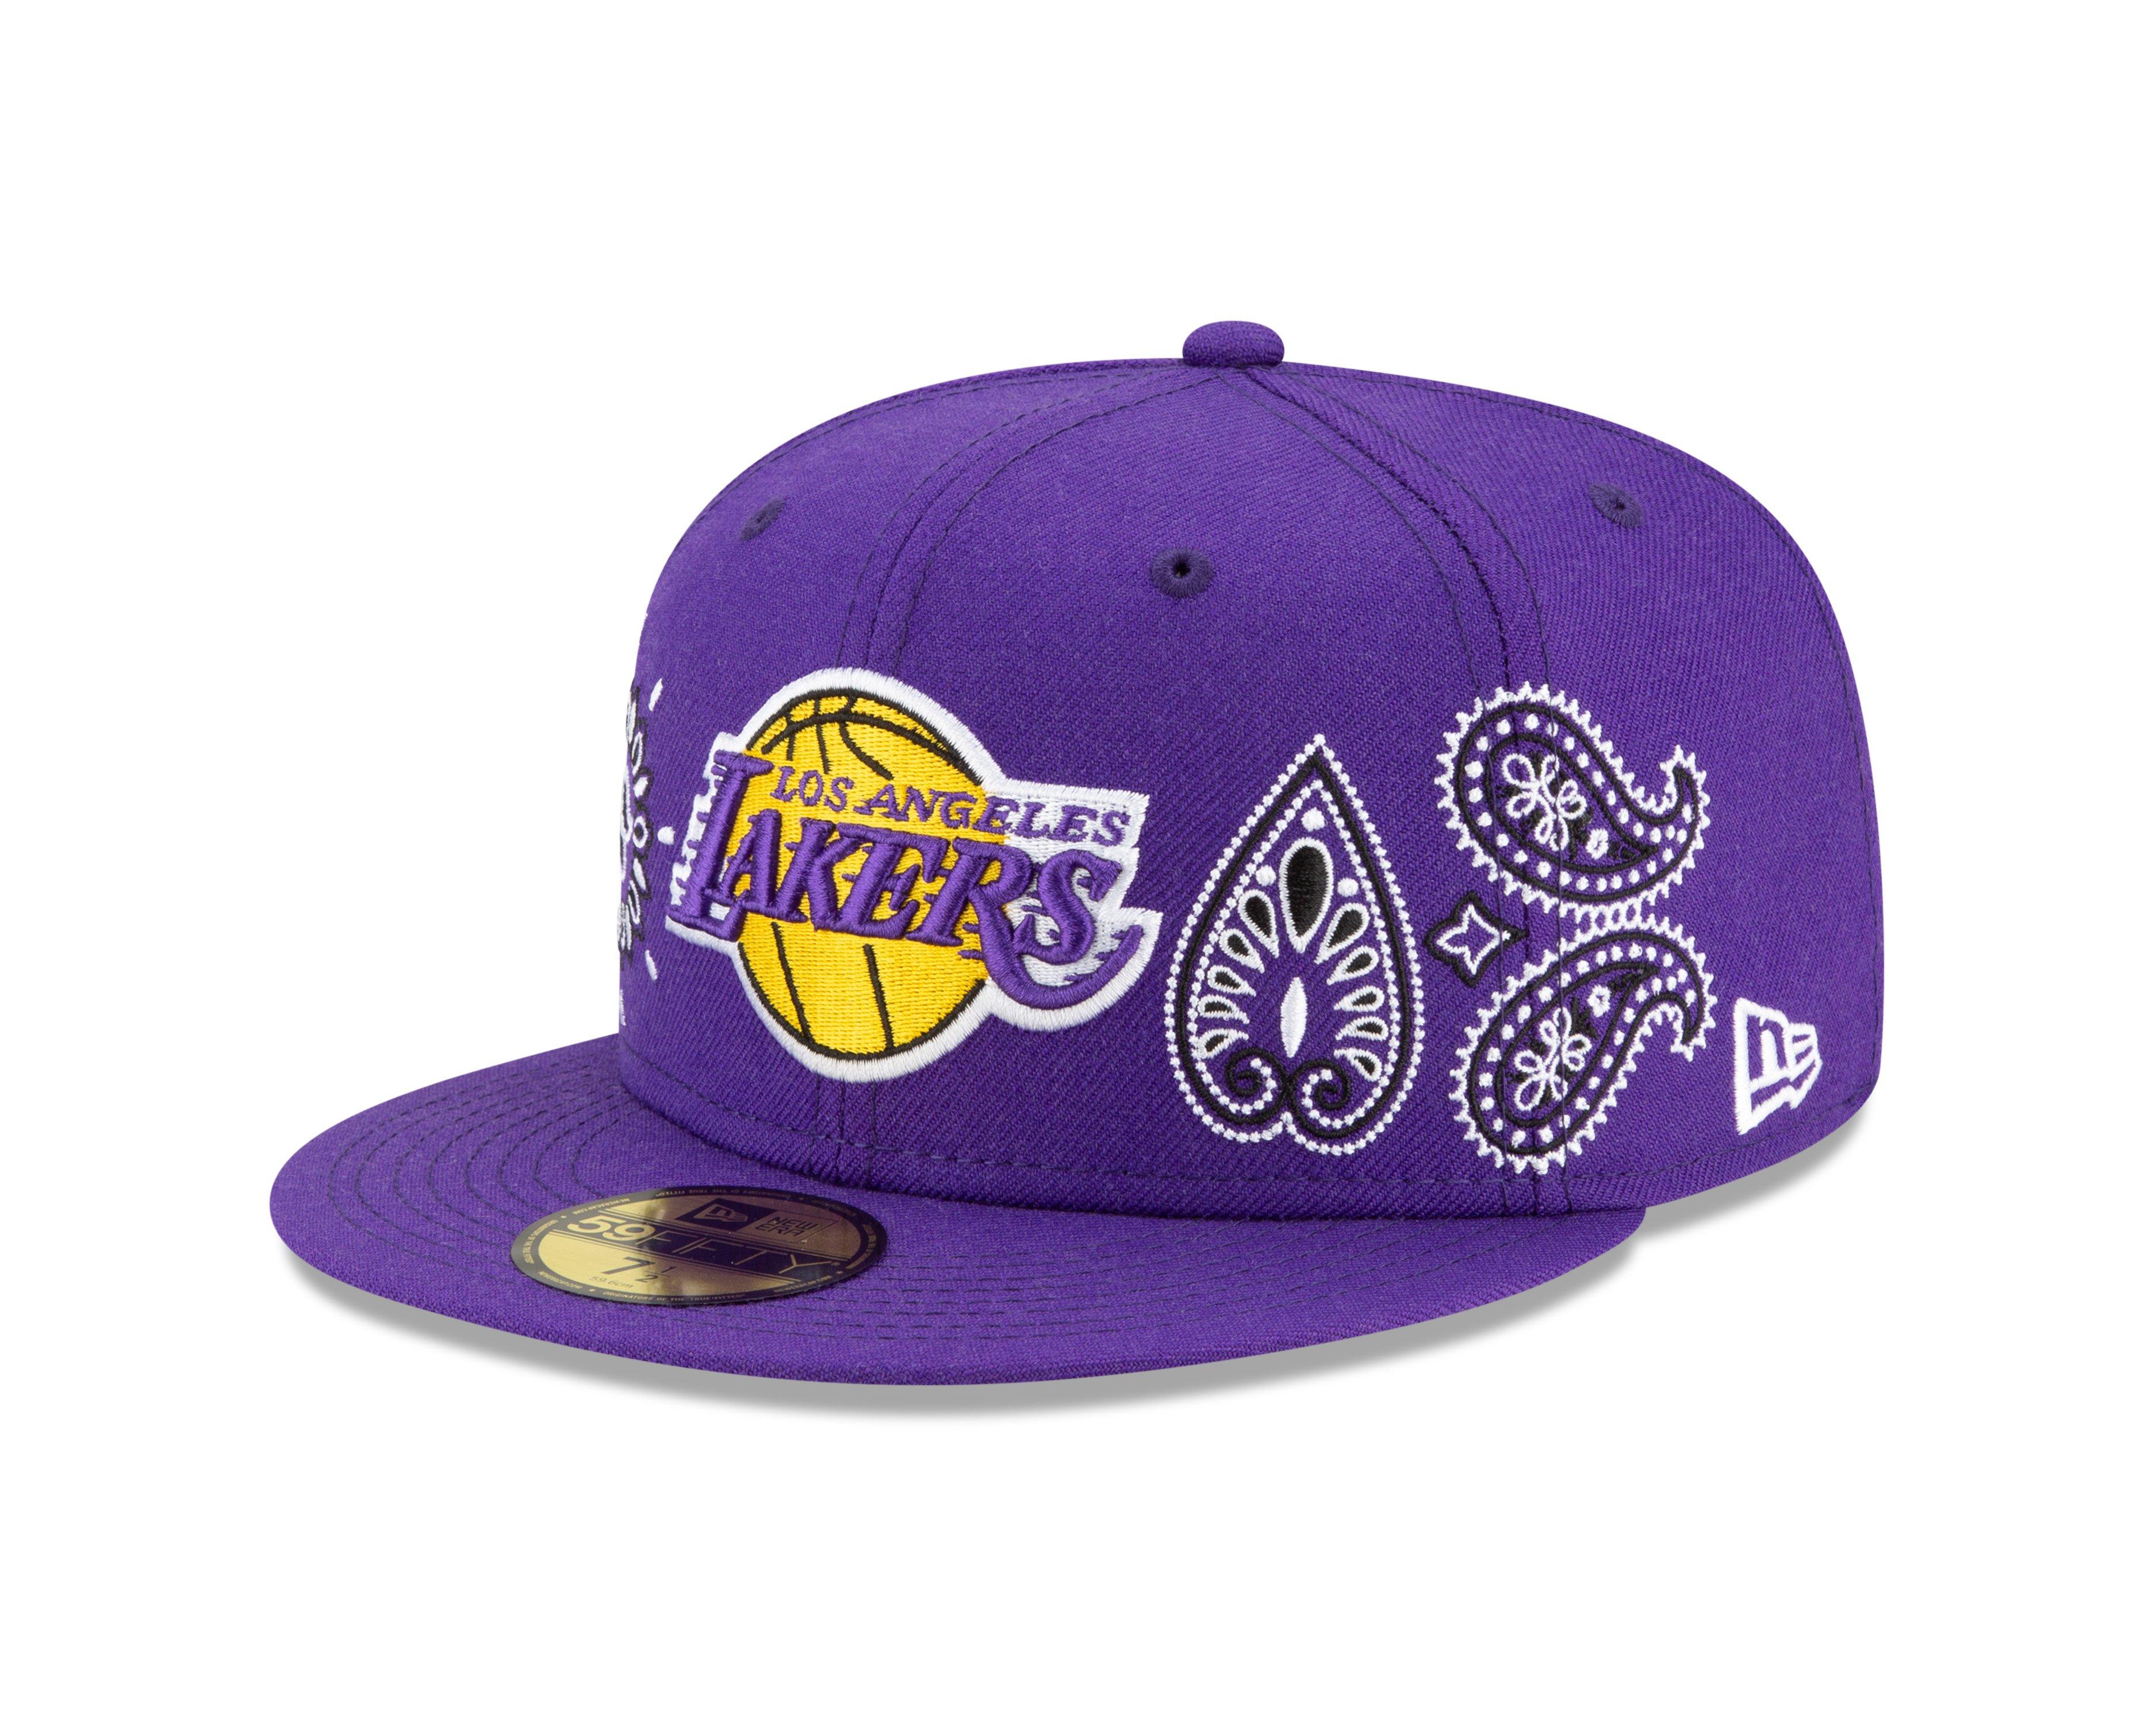 NBA Los Angeles Lakers LOGO Knit Beanie Hat NBA Store NEW NWT White